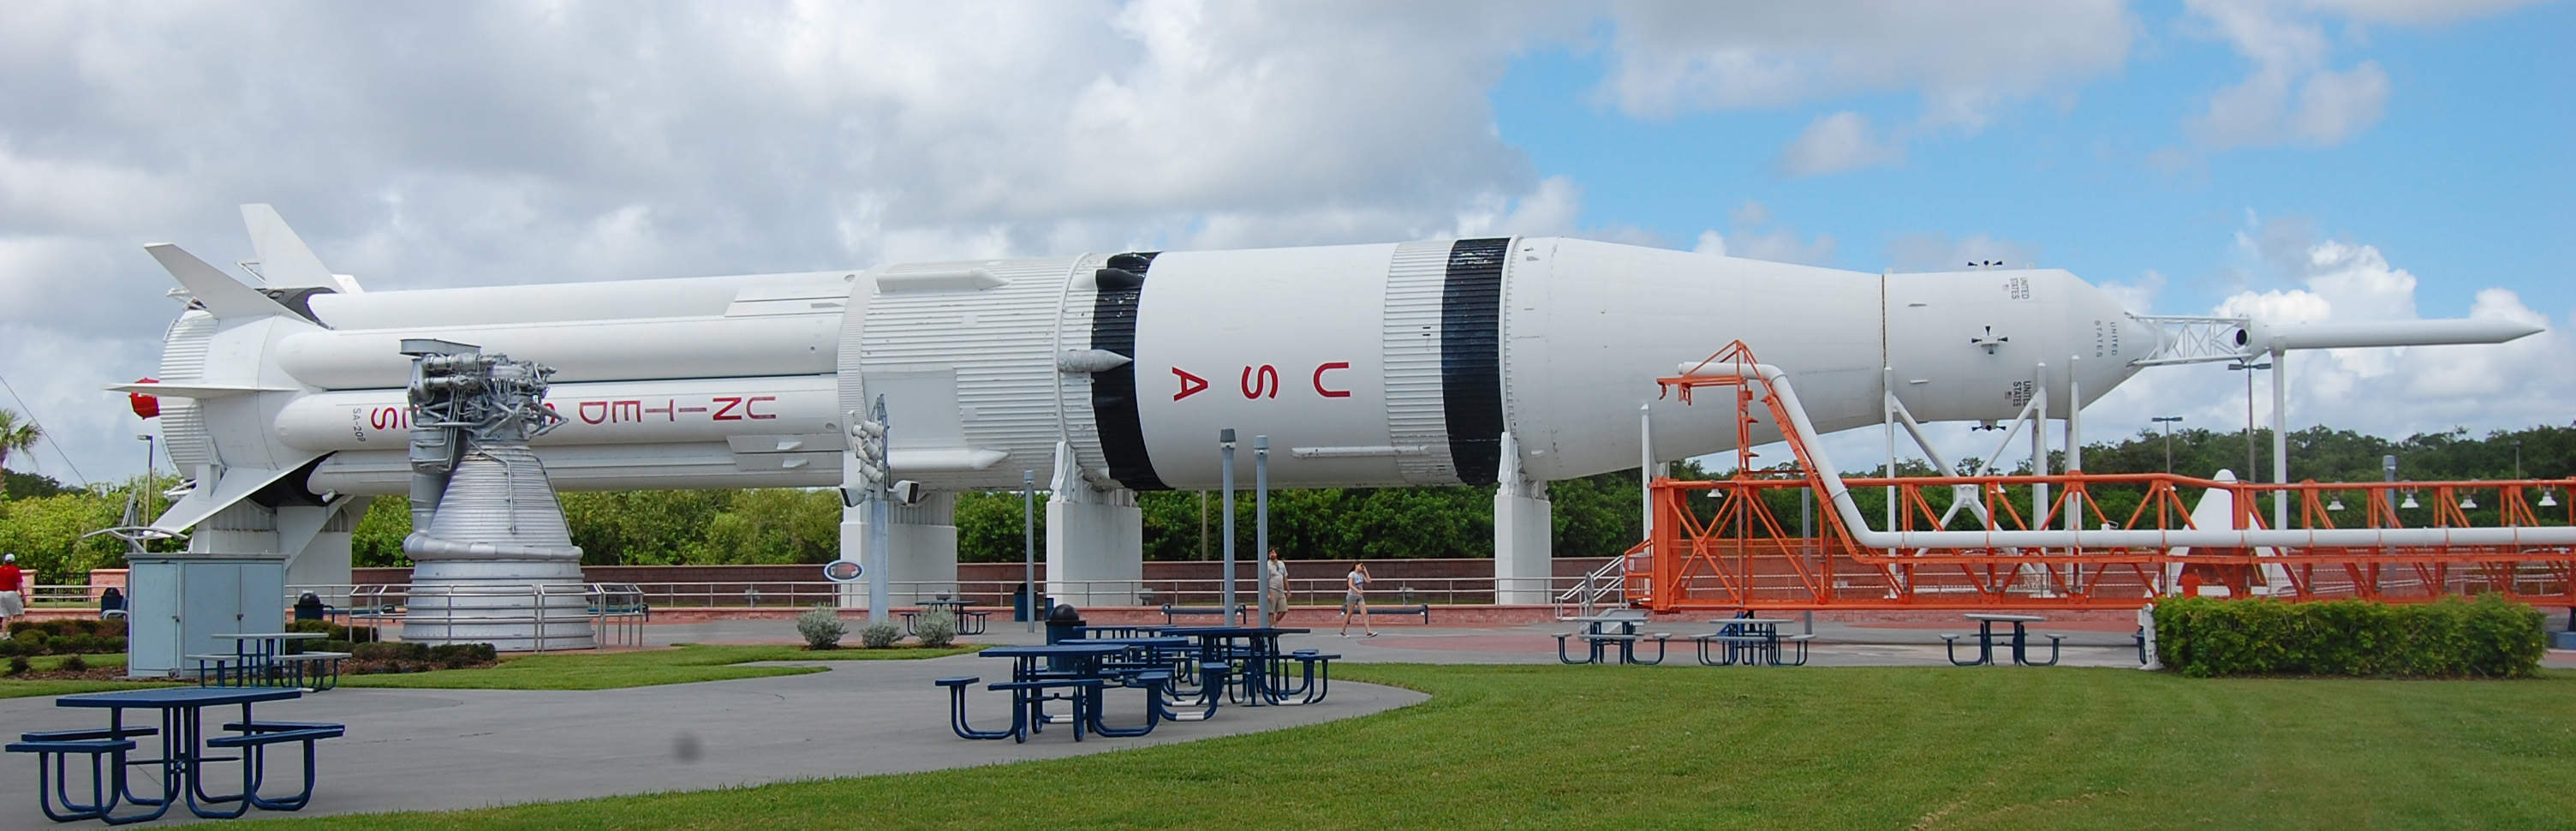 The Skylab 4 SA-209 Saturn IB rocket on display at the Visitor Center's Rocket Garden at NASA's Kennedy Space Center in Florida